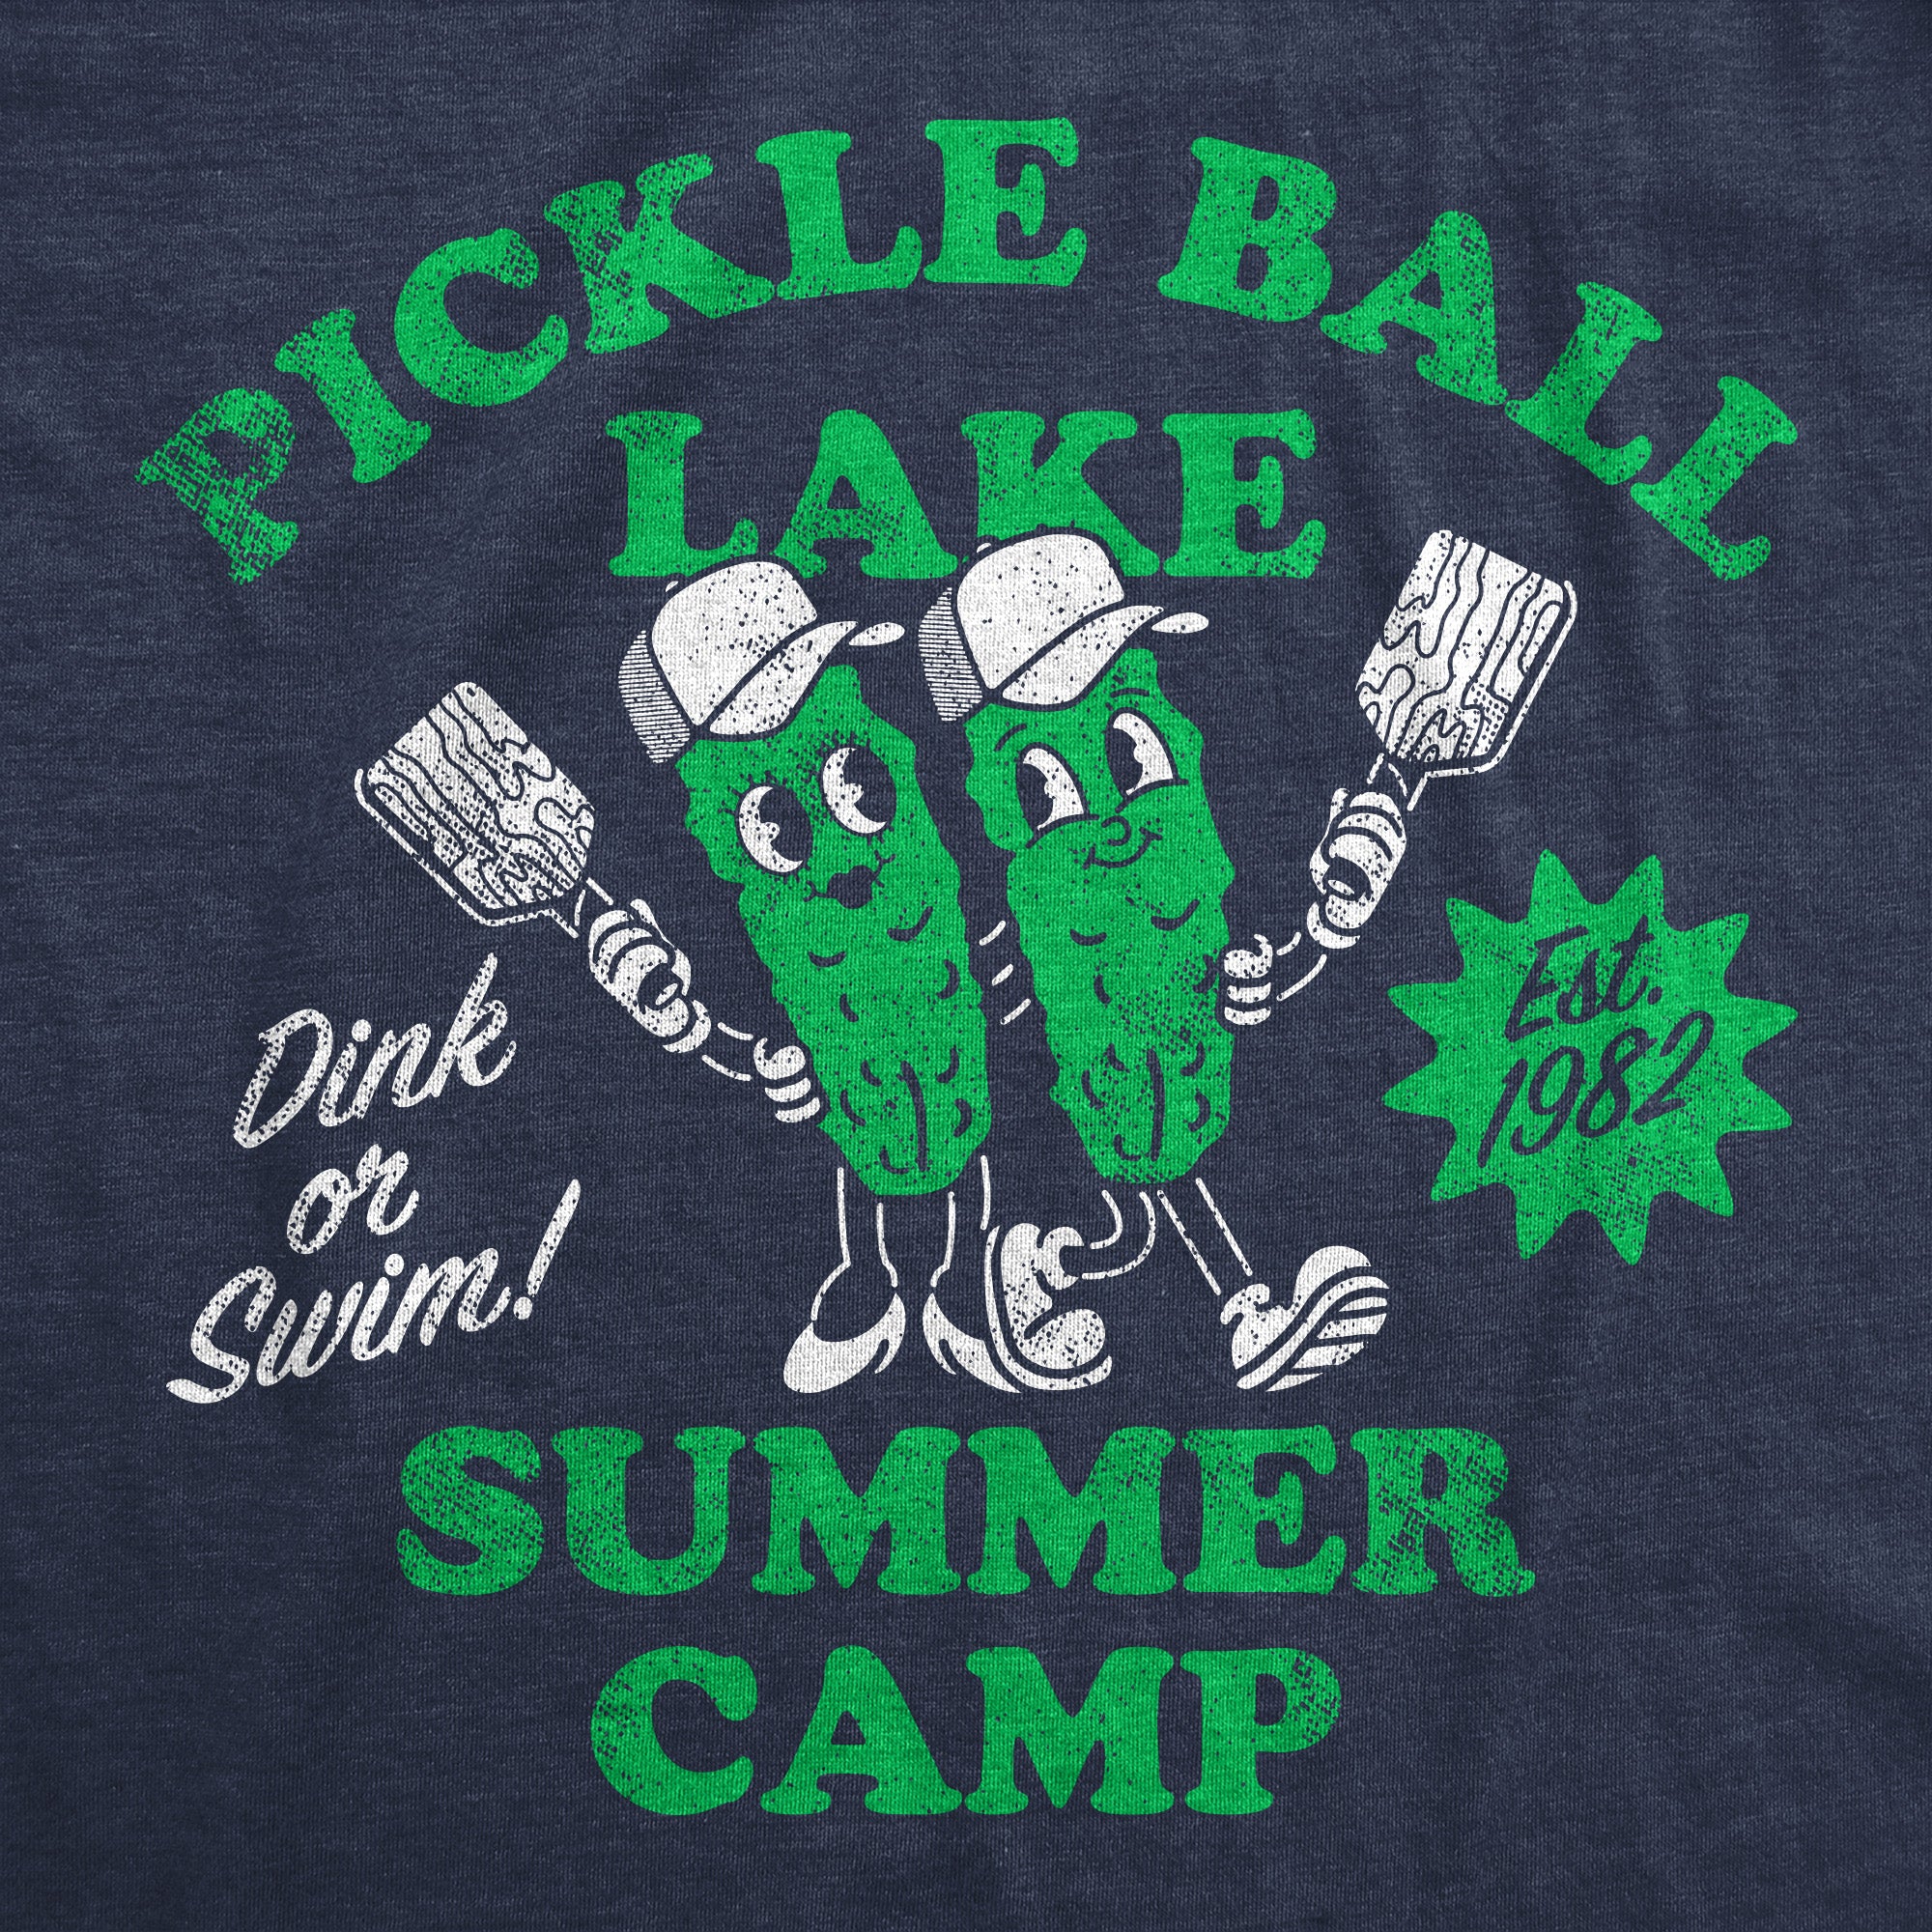 Funny Heather Navy - Pickleball Lake Pickleball Lake Summer Camp Womens T Shirt Nerdy Sarcastic Tee